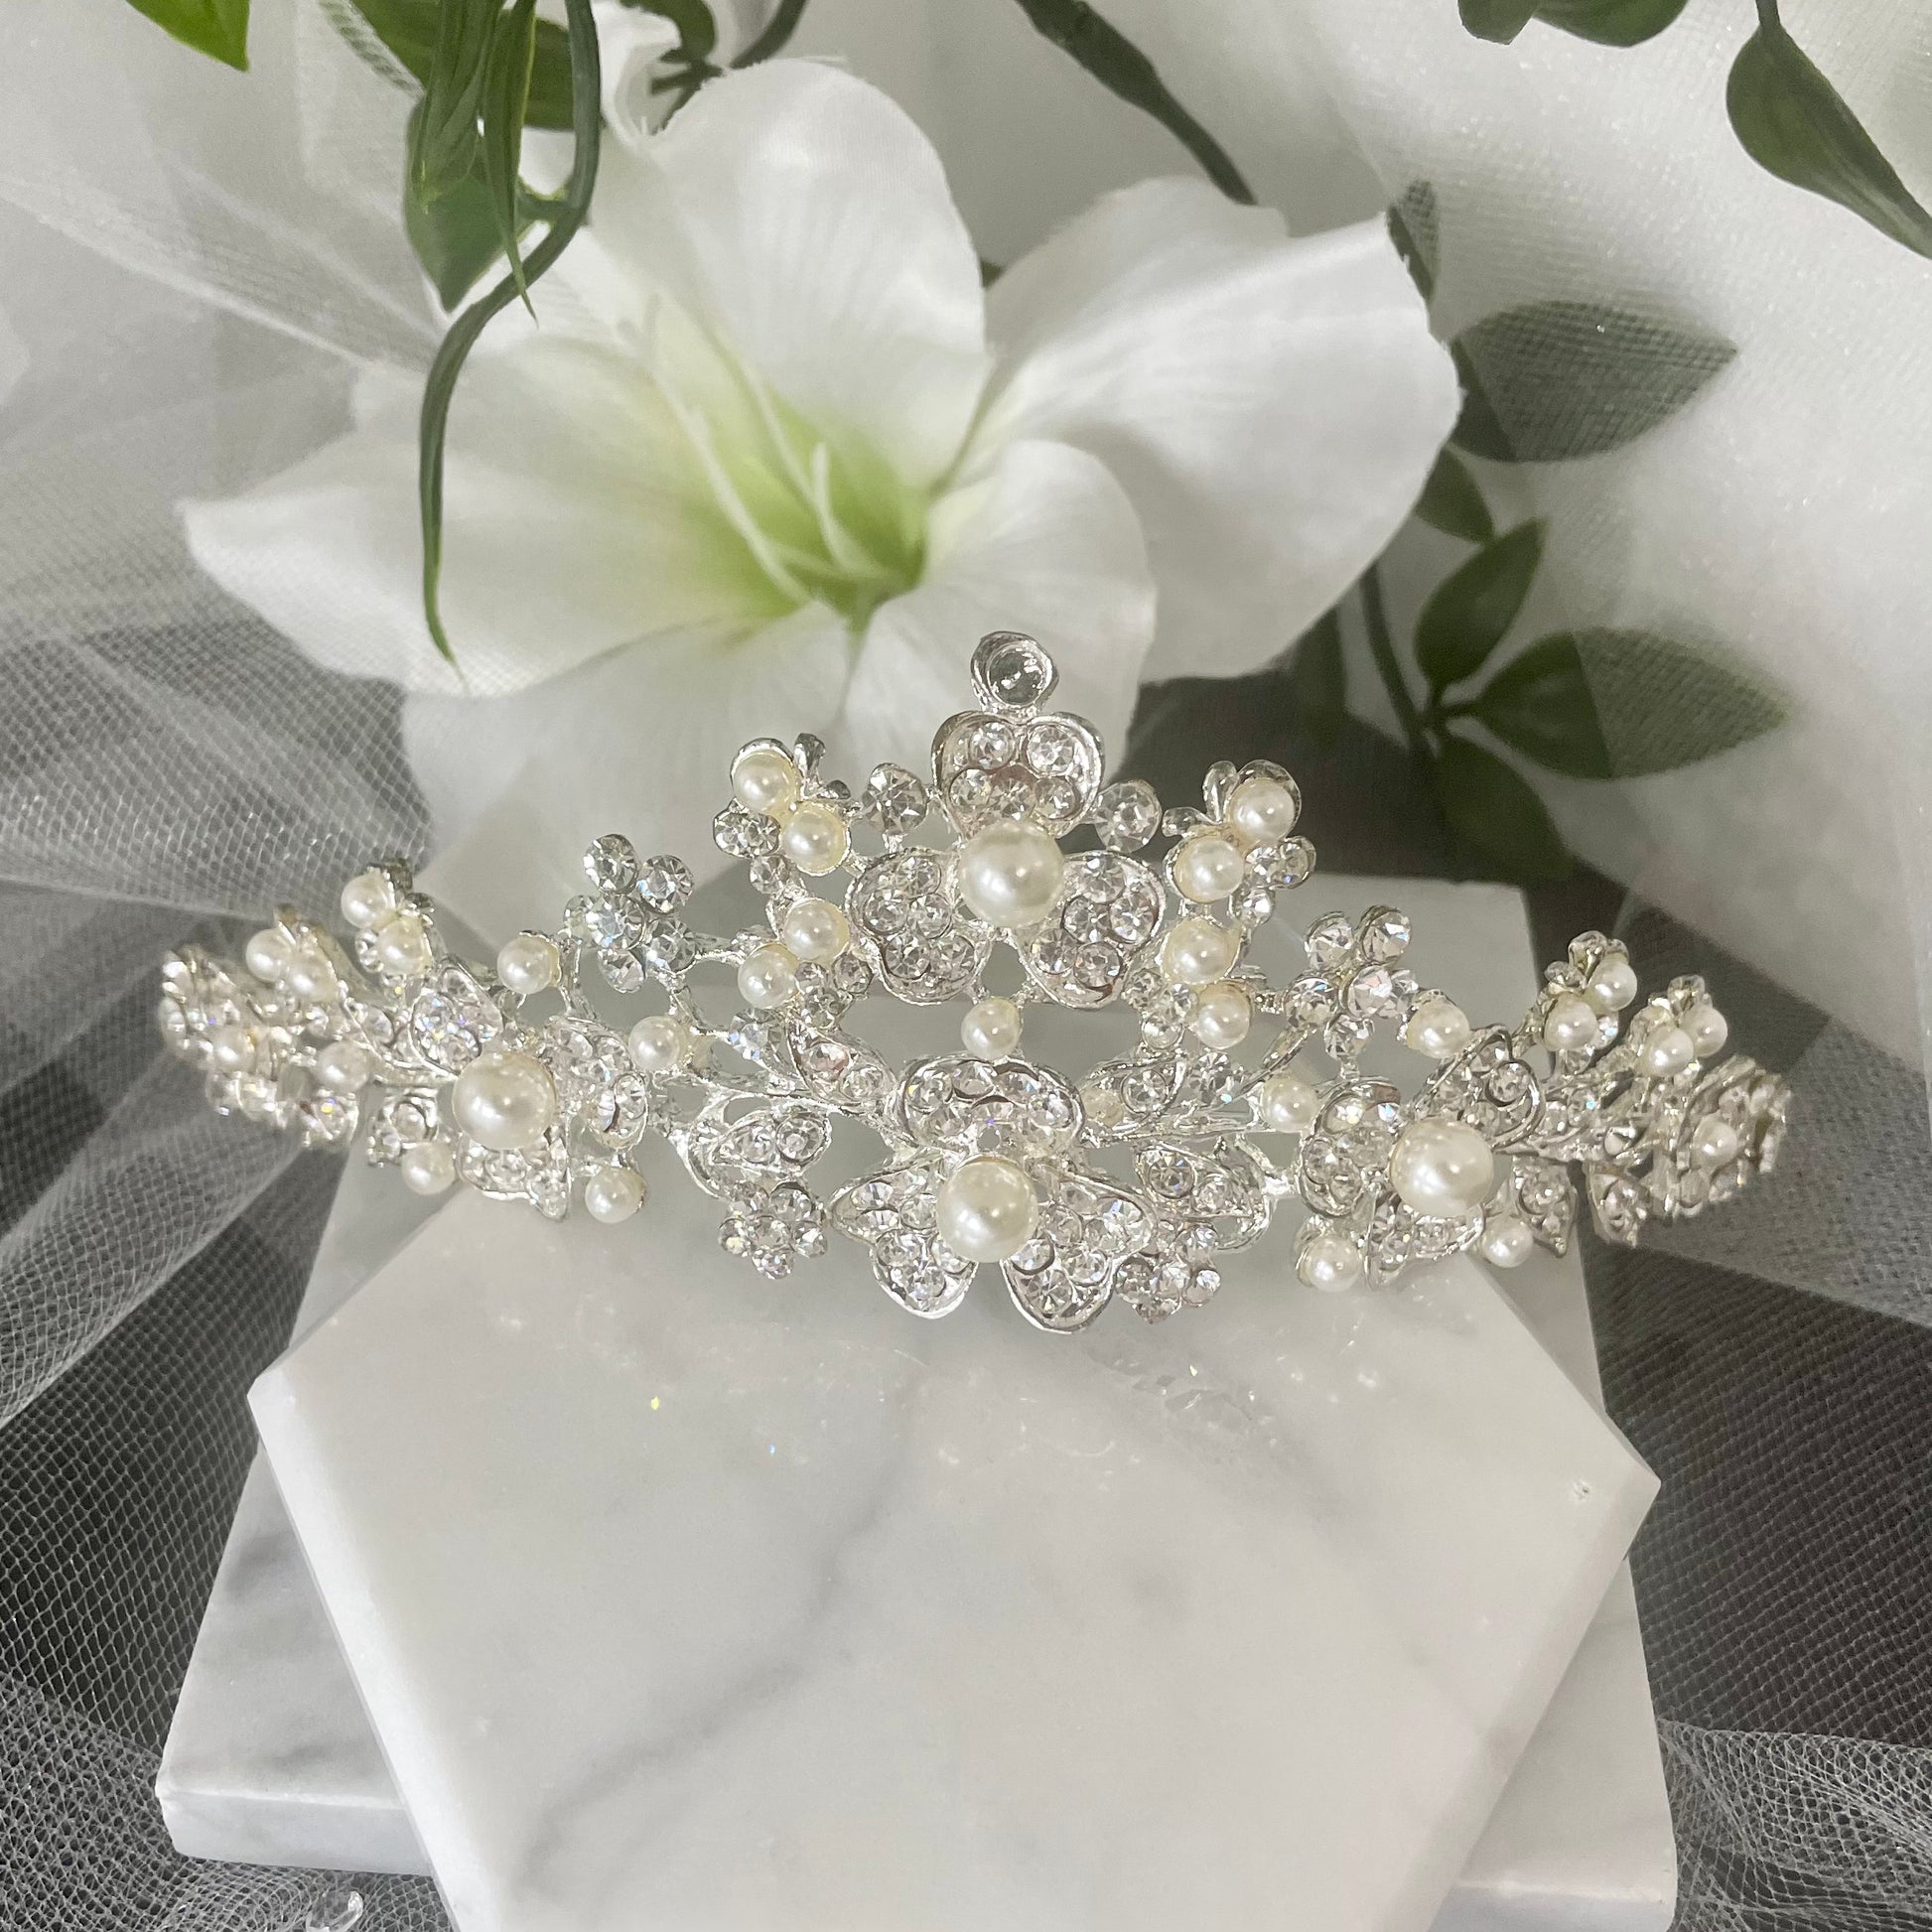 "Rosita Bridal Tiara - Exquisite Floral Design for a Radiant Wedding Day Look"